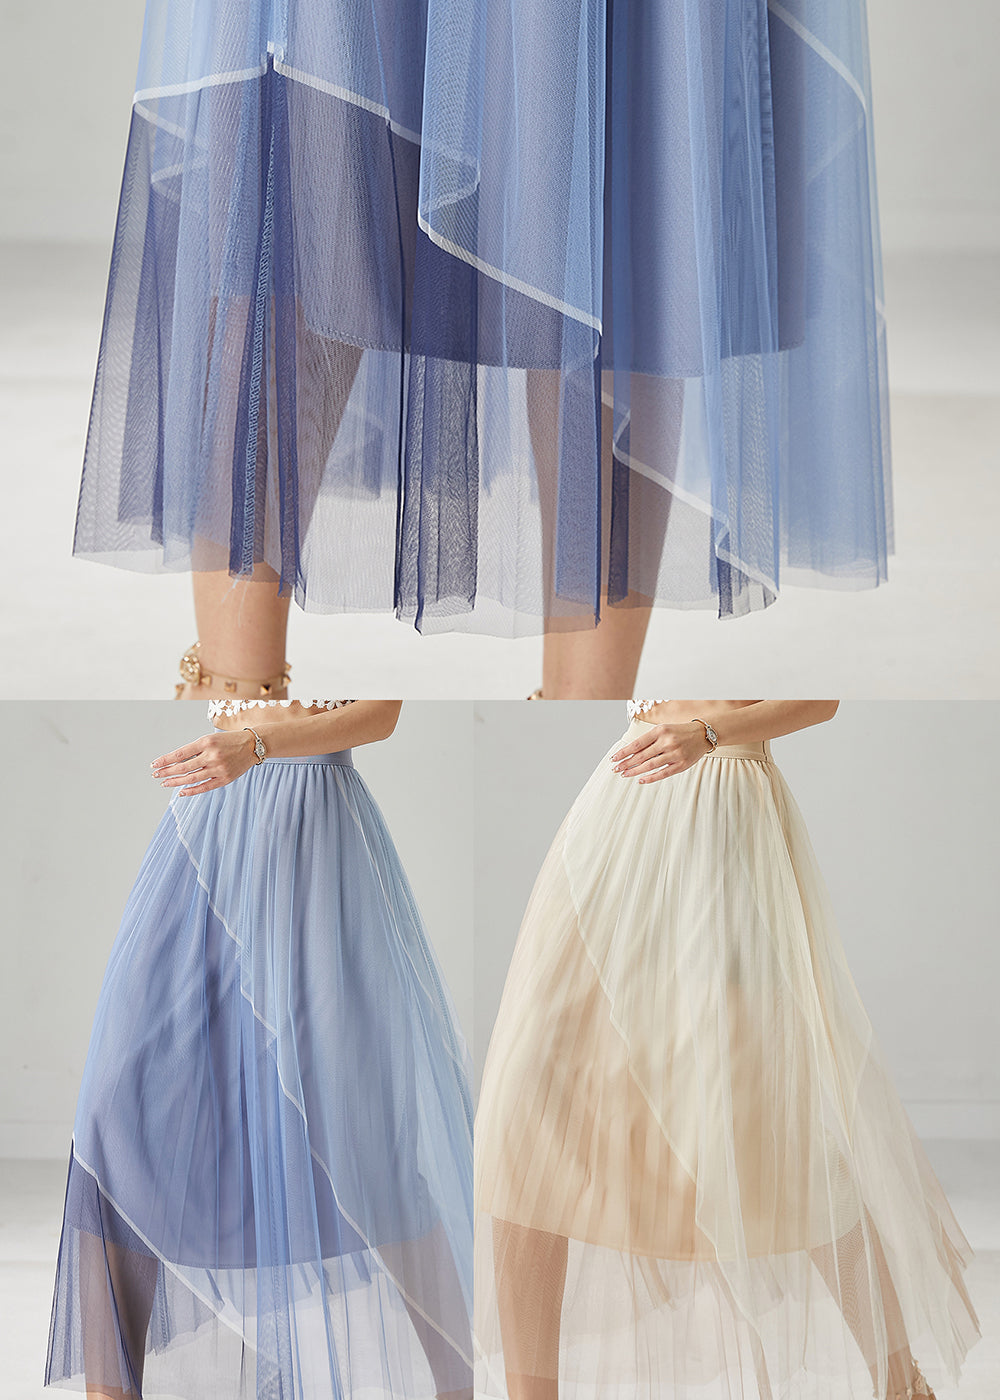 Blue Patchwork Tulle Vacation Skirts Elastic Waist Summer YU1030